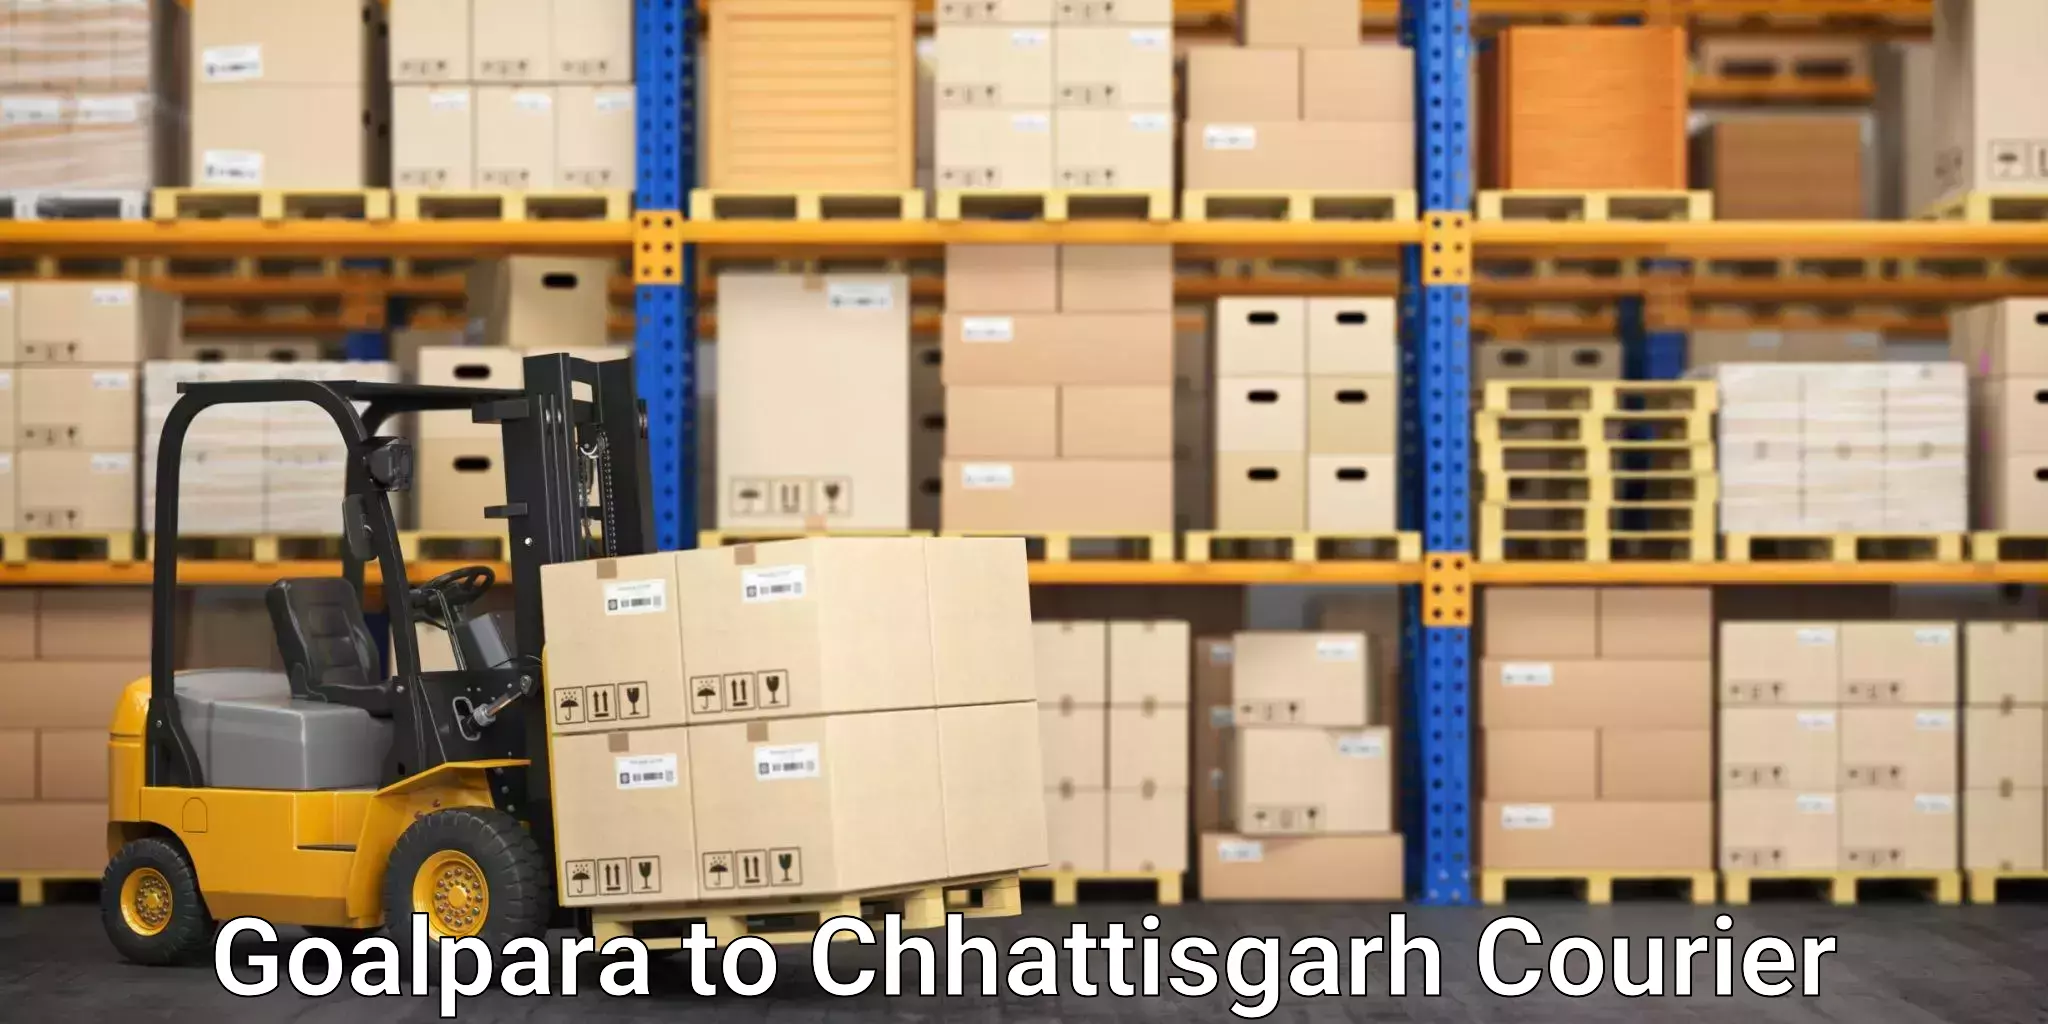 High-speed parcel service Goalpara to Chhattisgarh